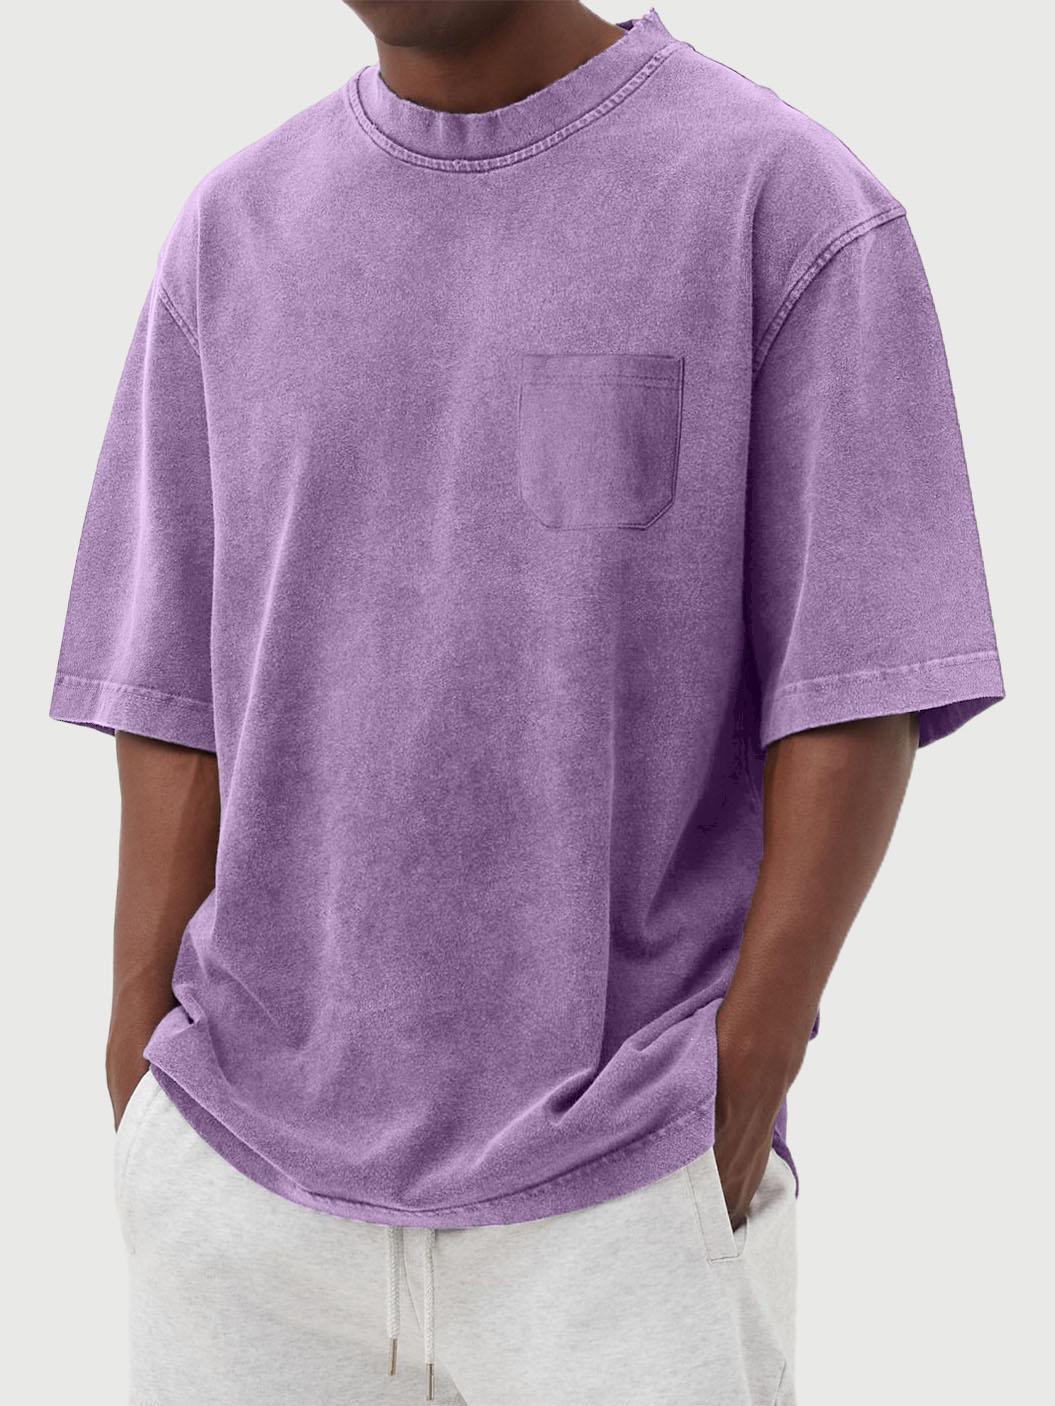 Men's Pocket Cotton Washed Distressed Batik Casual Short Sleeve T-Shirt